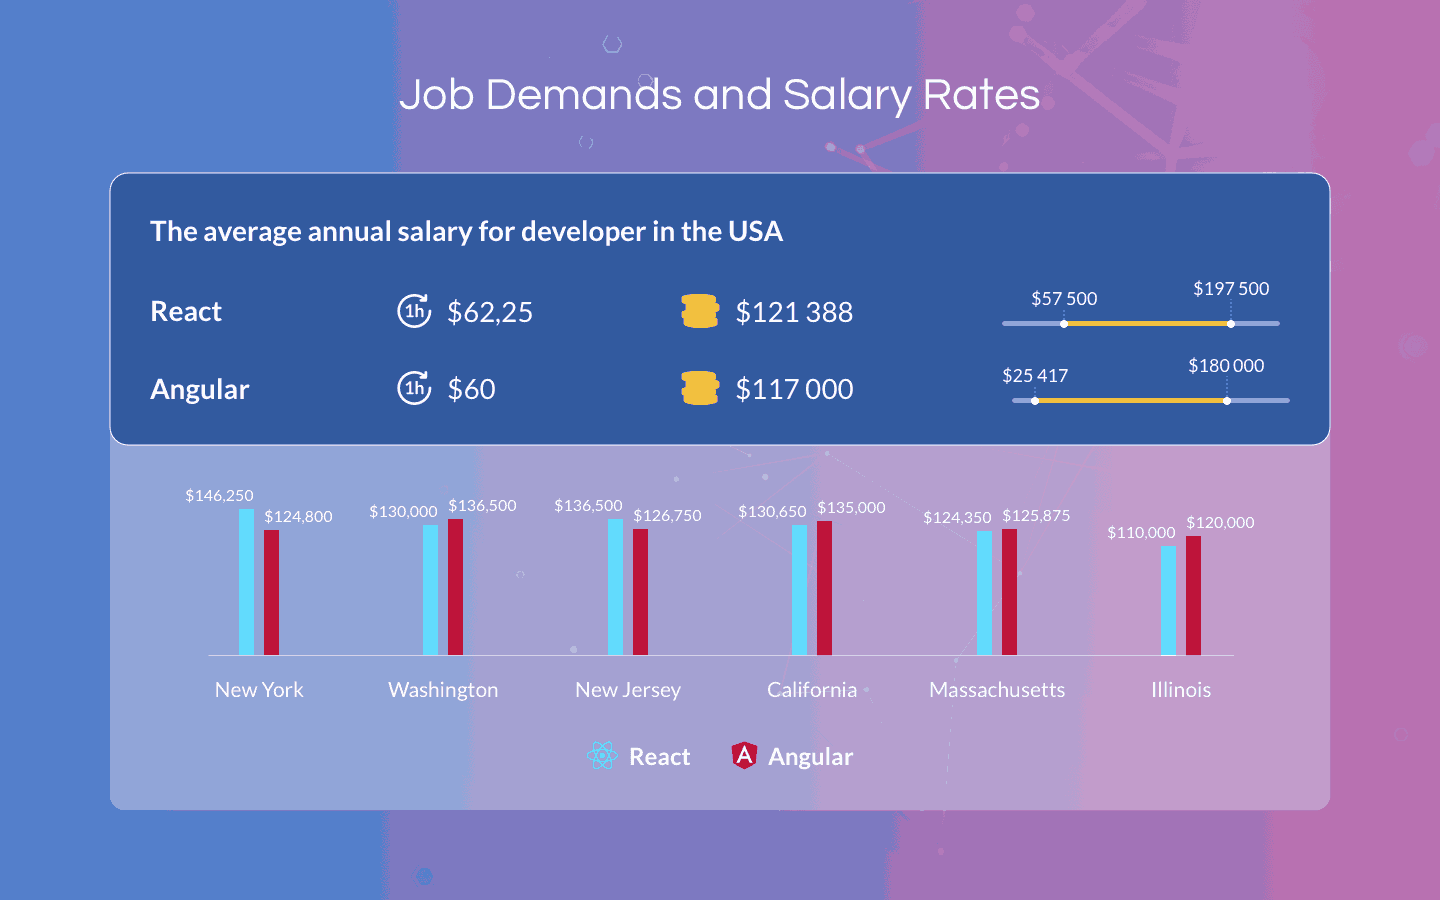 Angular vs React salary rates and demand for developers - Infographics | LITSLINK Blog